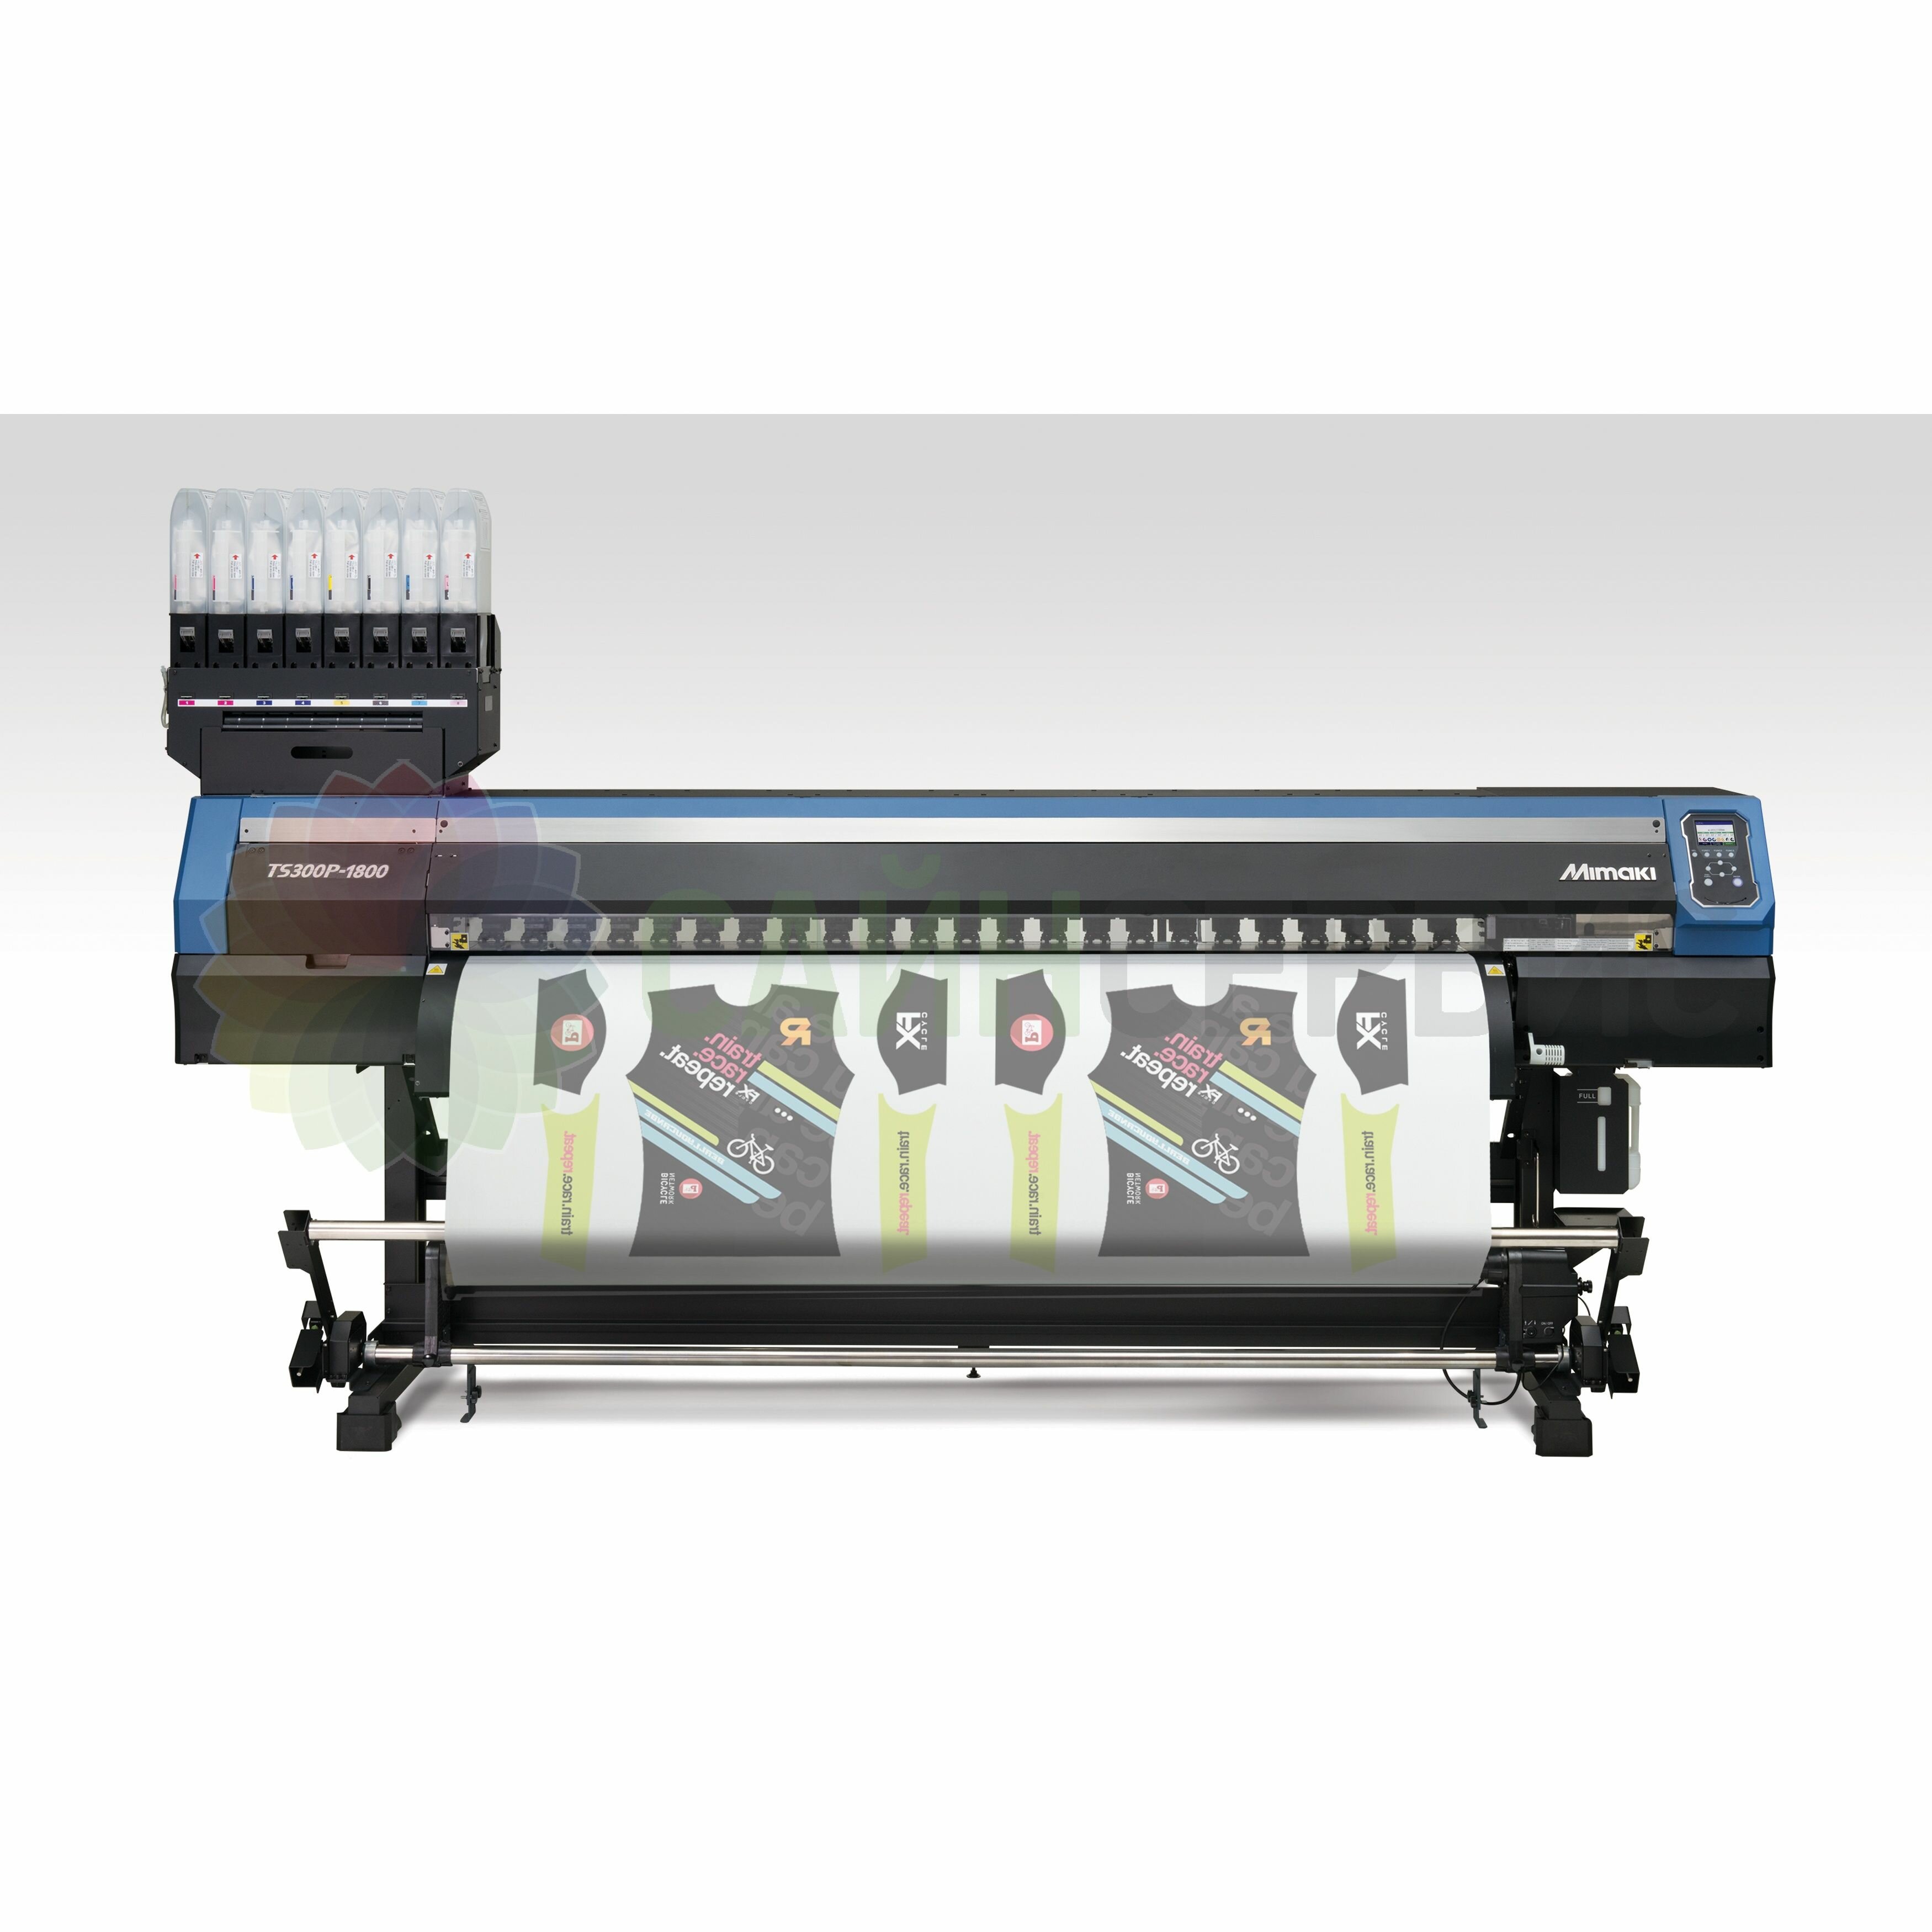 Текстильный принтер MIMAKI TS300P-1800